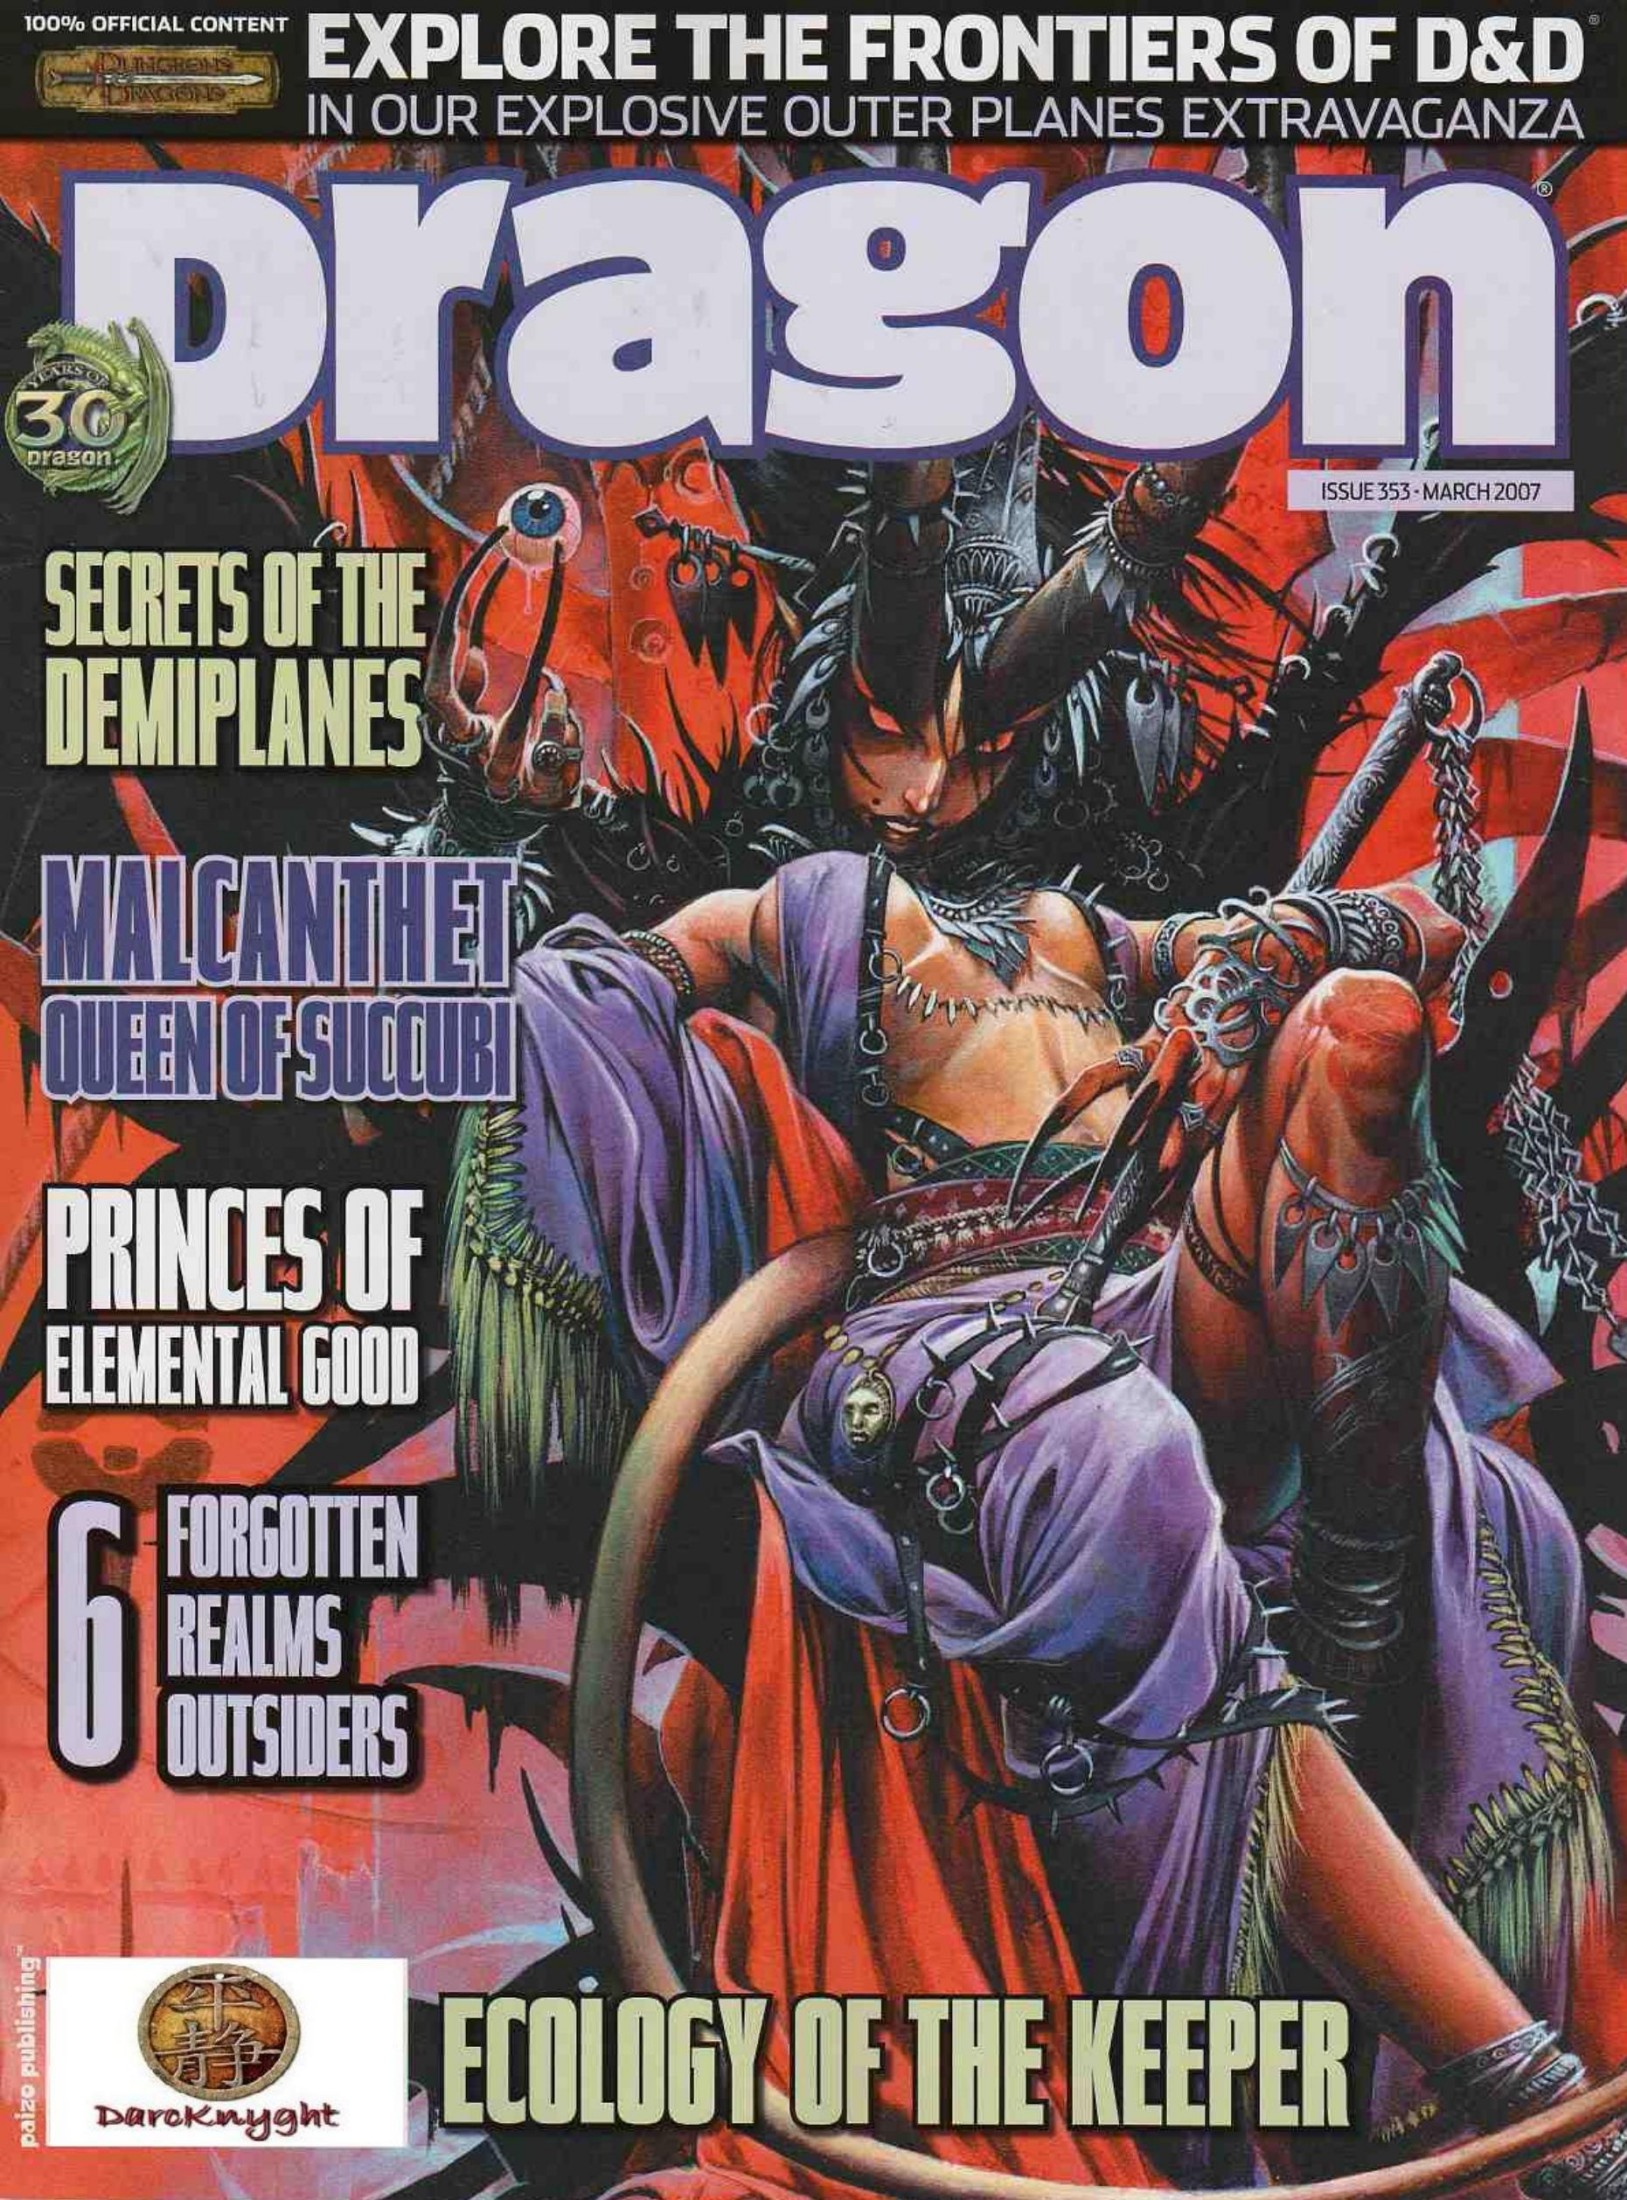 Dragon Magazine #353